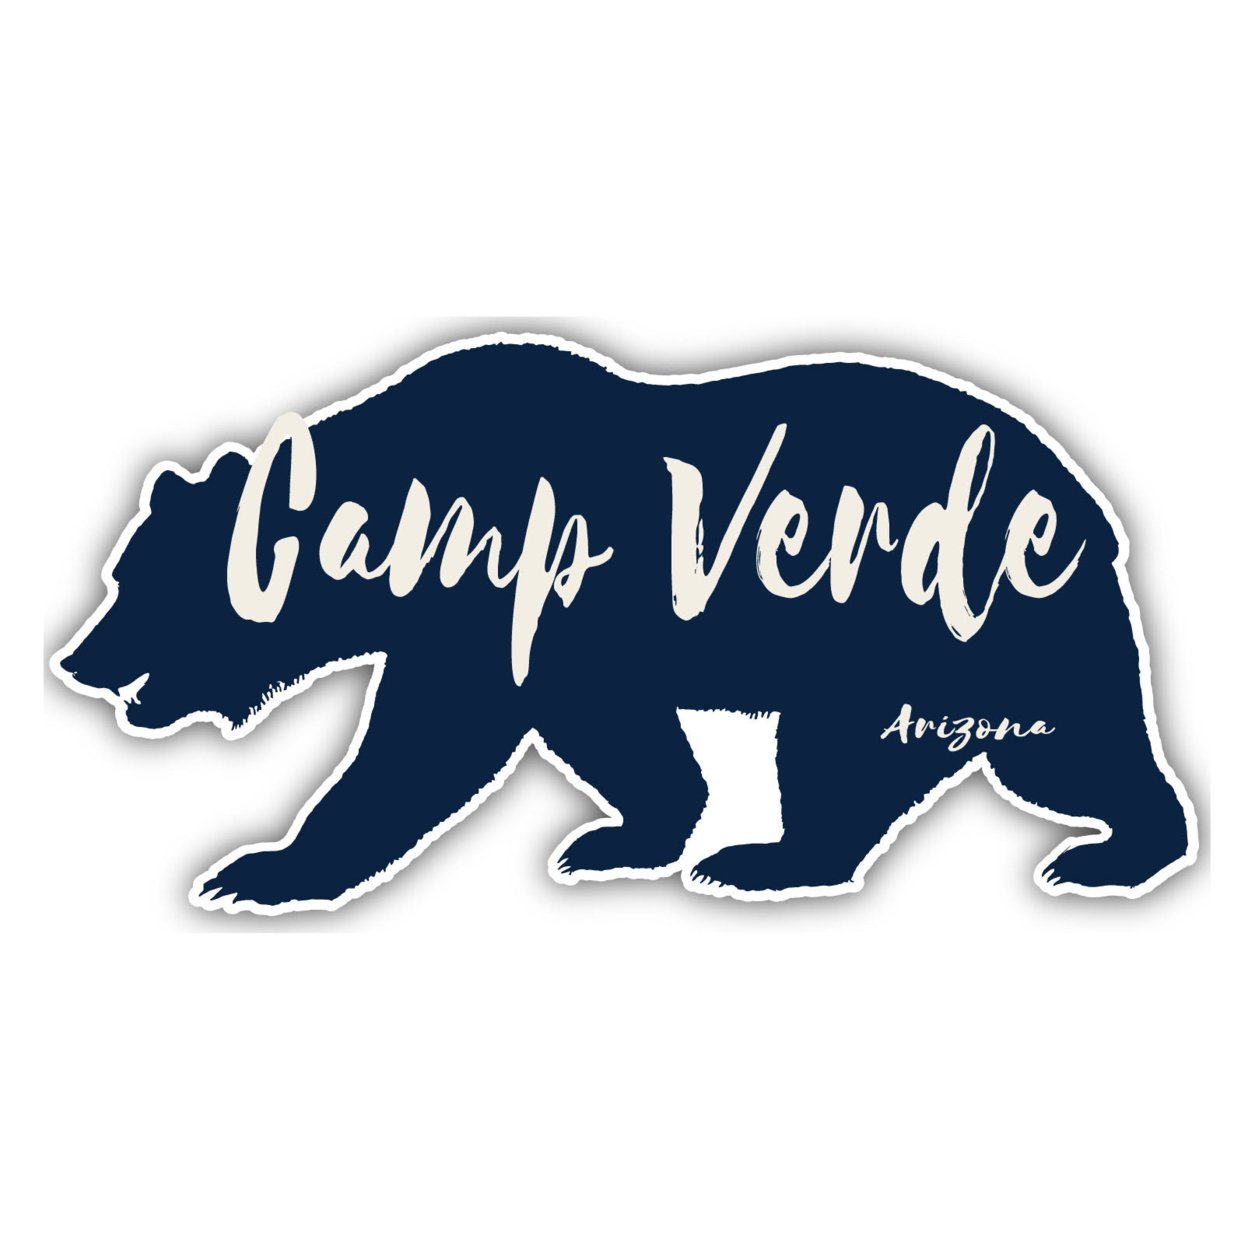 Camp Verde Arizona Souvenir Decorative Stickers (Choose Theme And Size) - Single Unit, 6-Inch, Bear